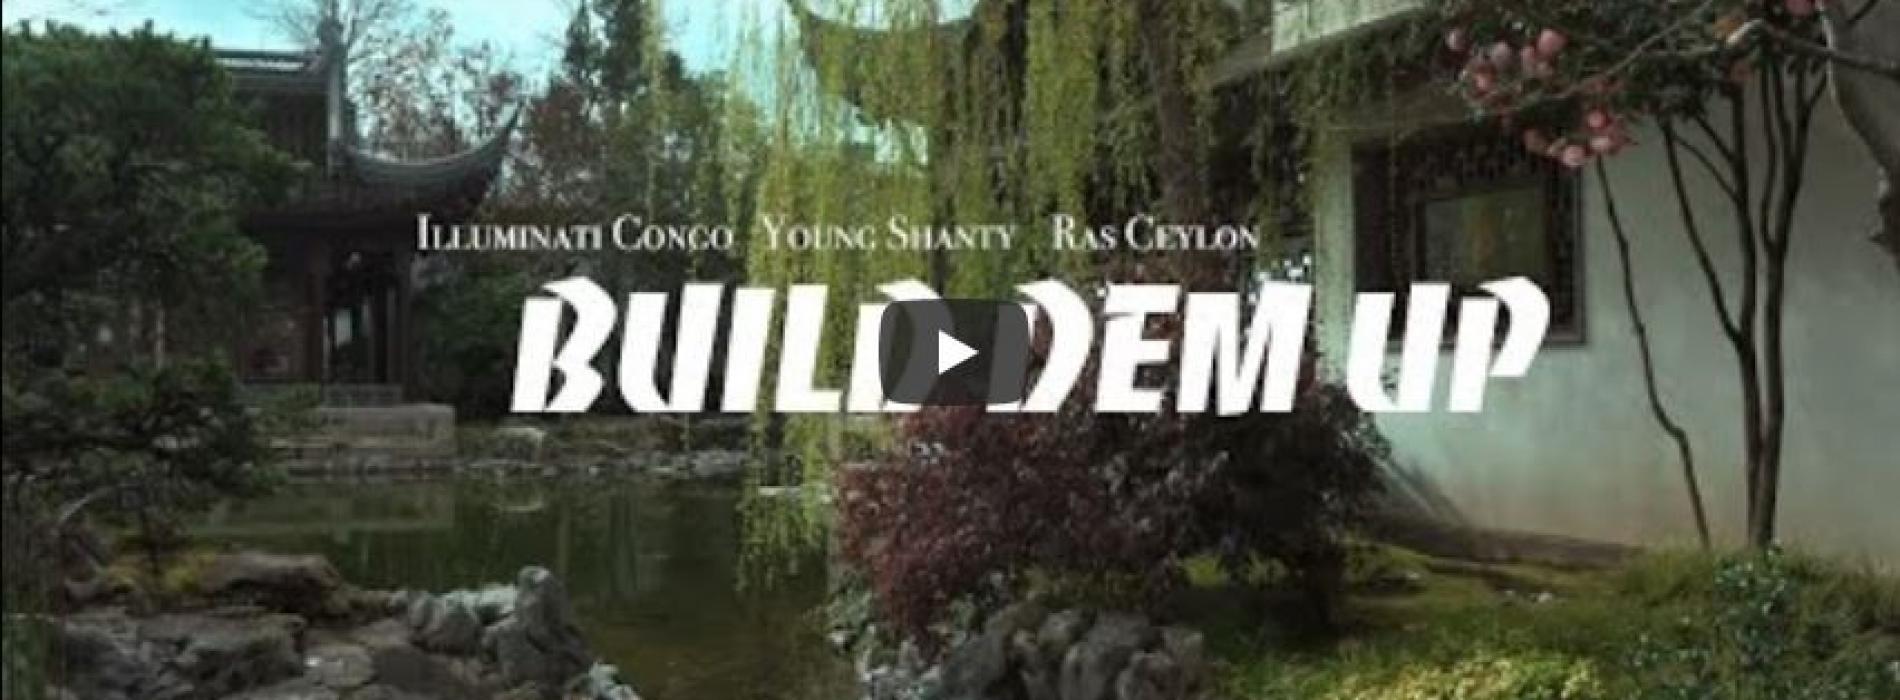 New Music : BUILD DEM UP – Congo Shanty ft. Ras Ceylon